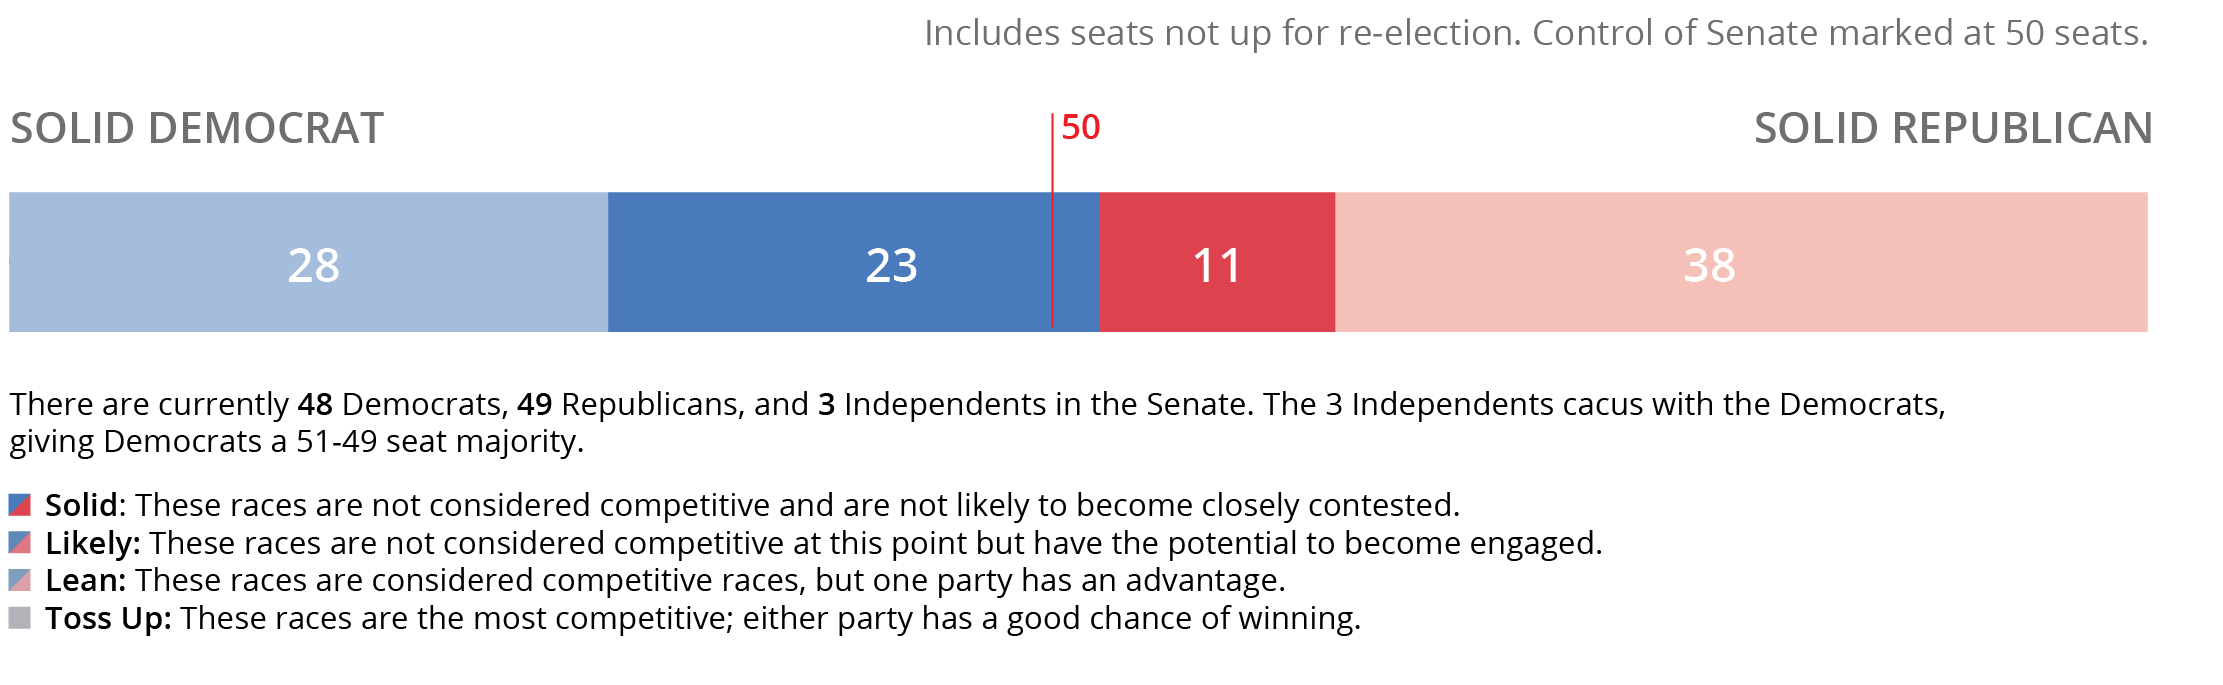 Senate Seats